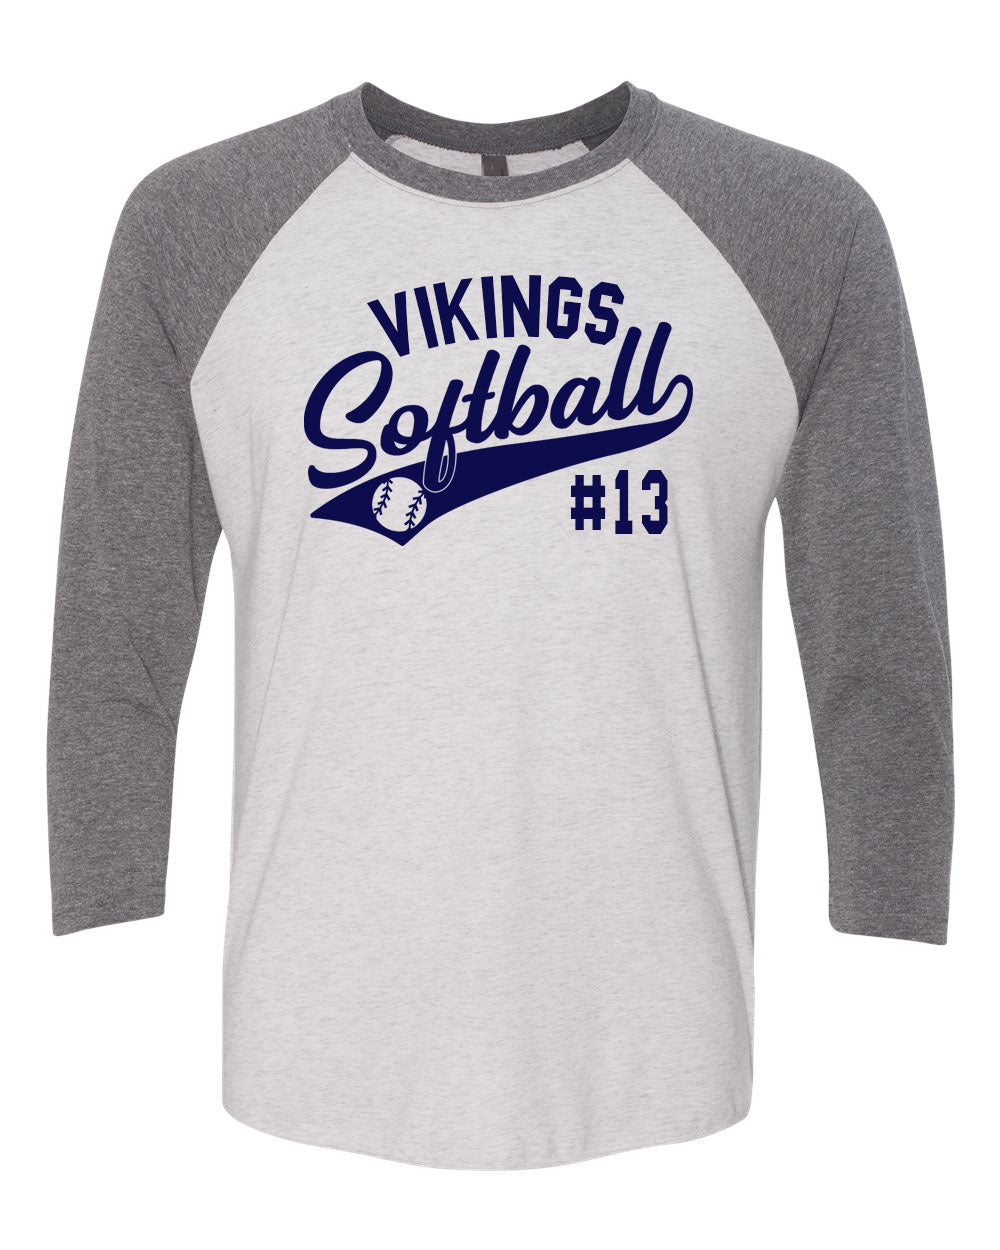 Viking Softball raglan shirt